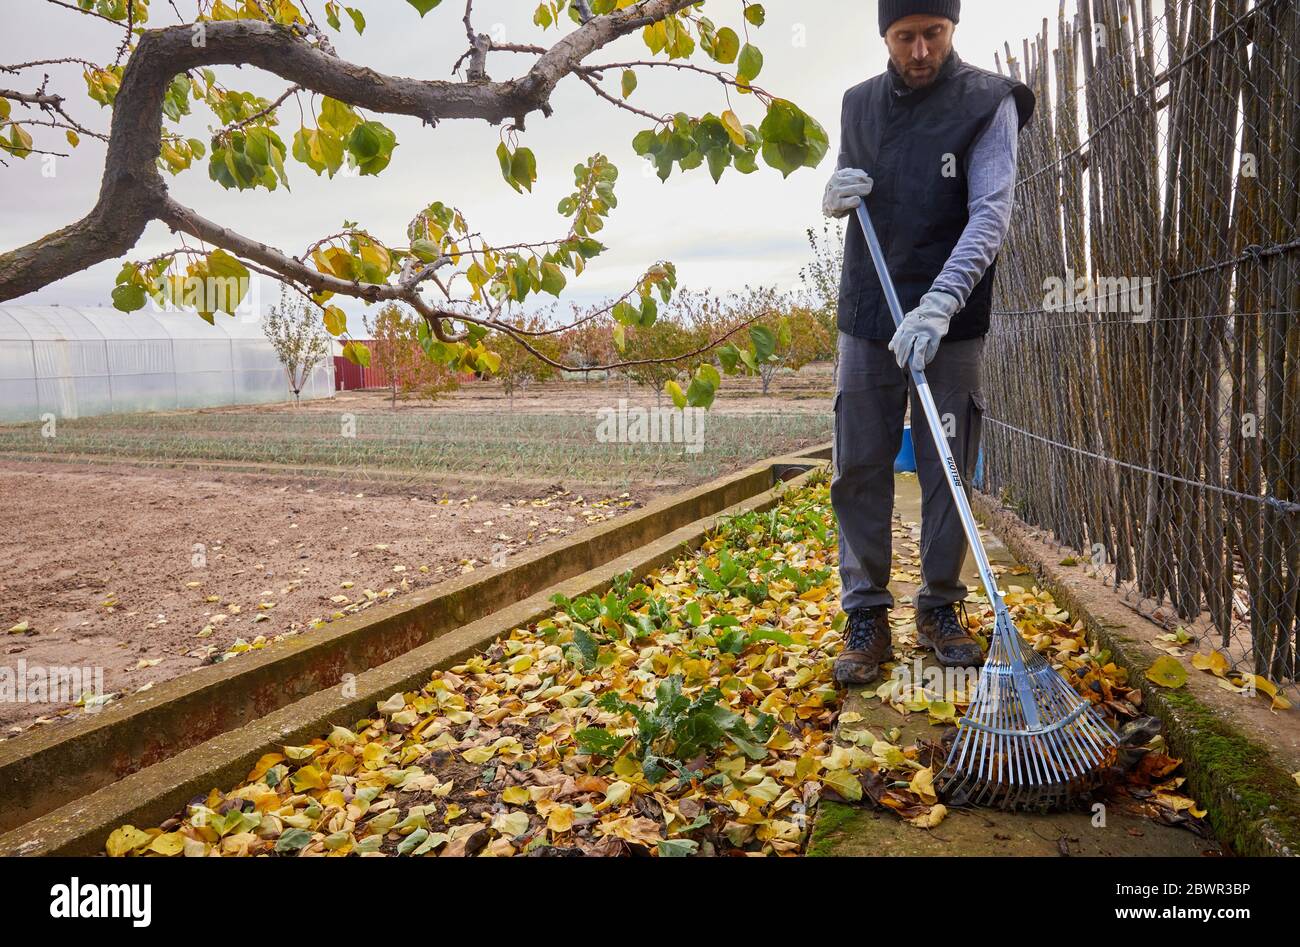 Agricultor recogiendo hojas con rastrillo, Huerto, Calahorra, la Rioja, España, Europa Foto de stock